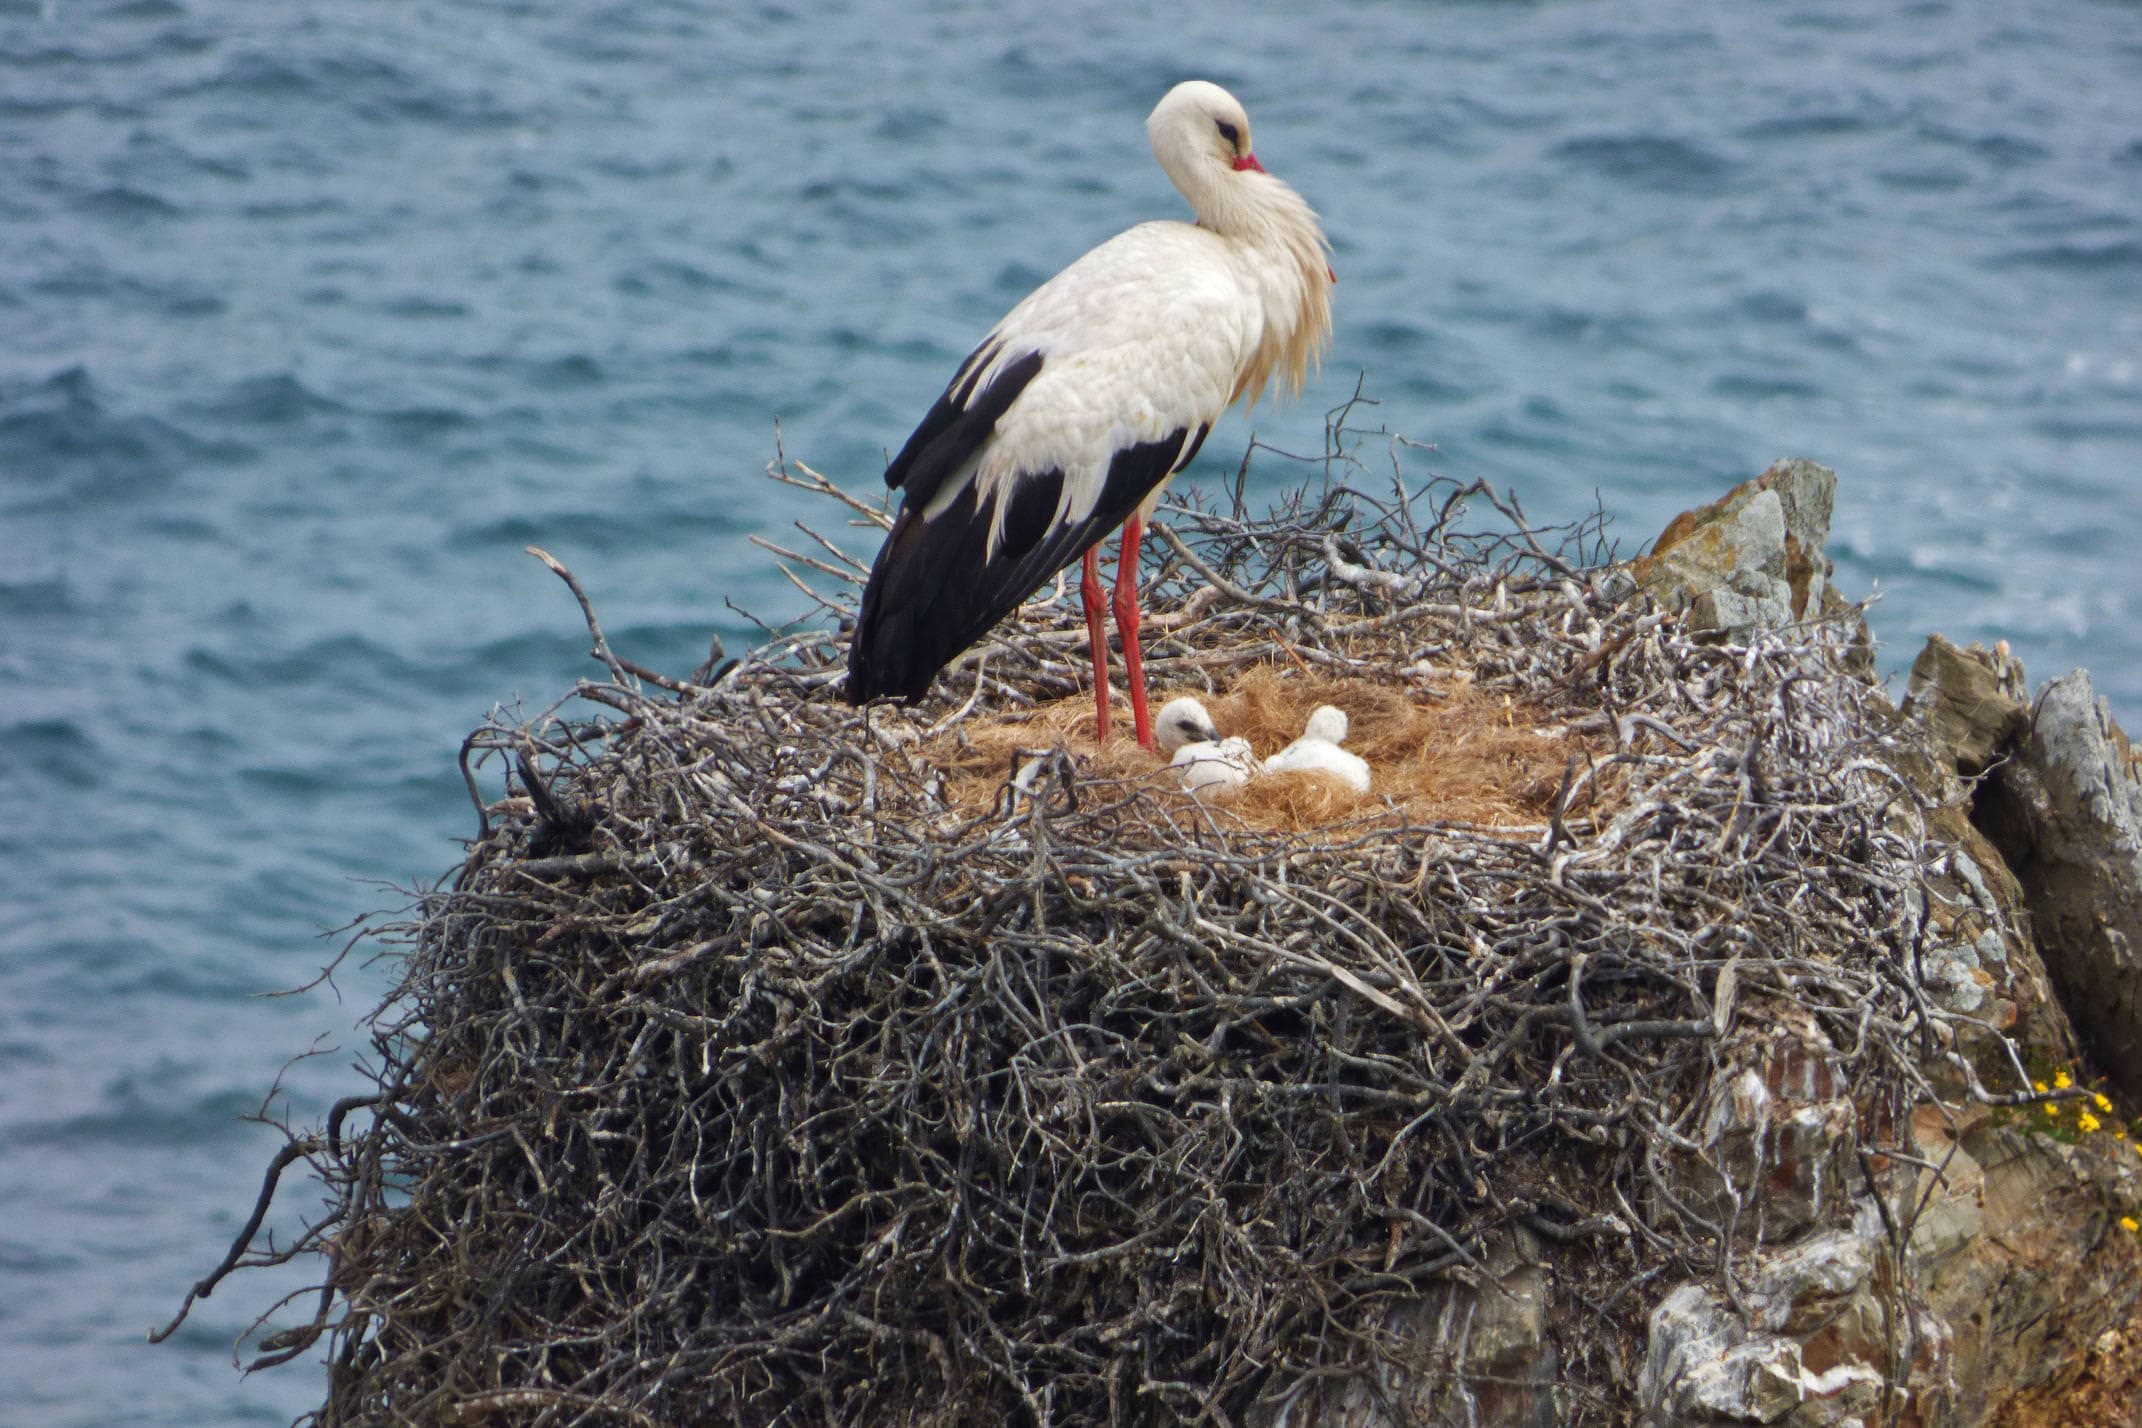 Portugal alentejo rota vicentina cliff stork nest chicks c diego pura